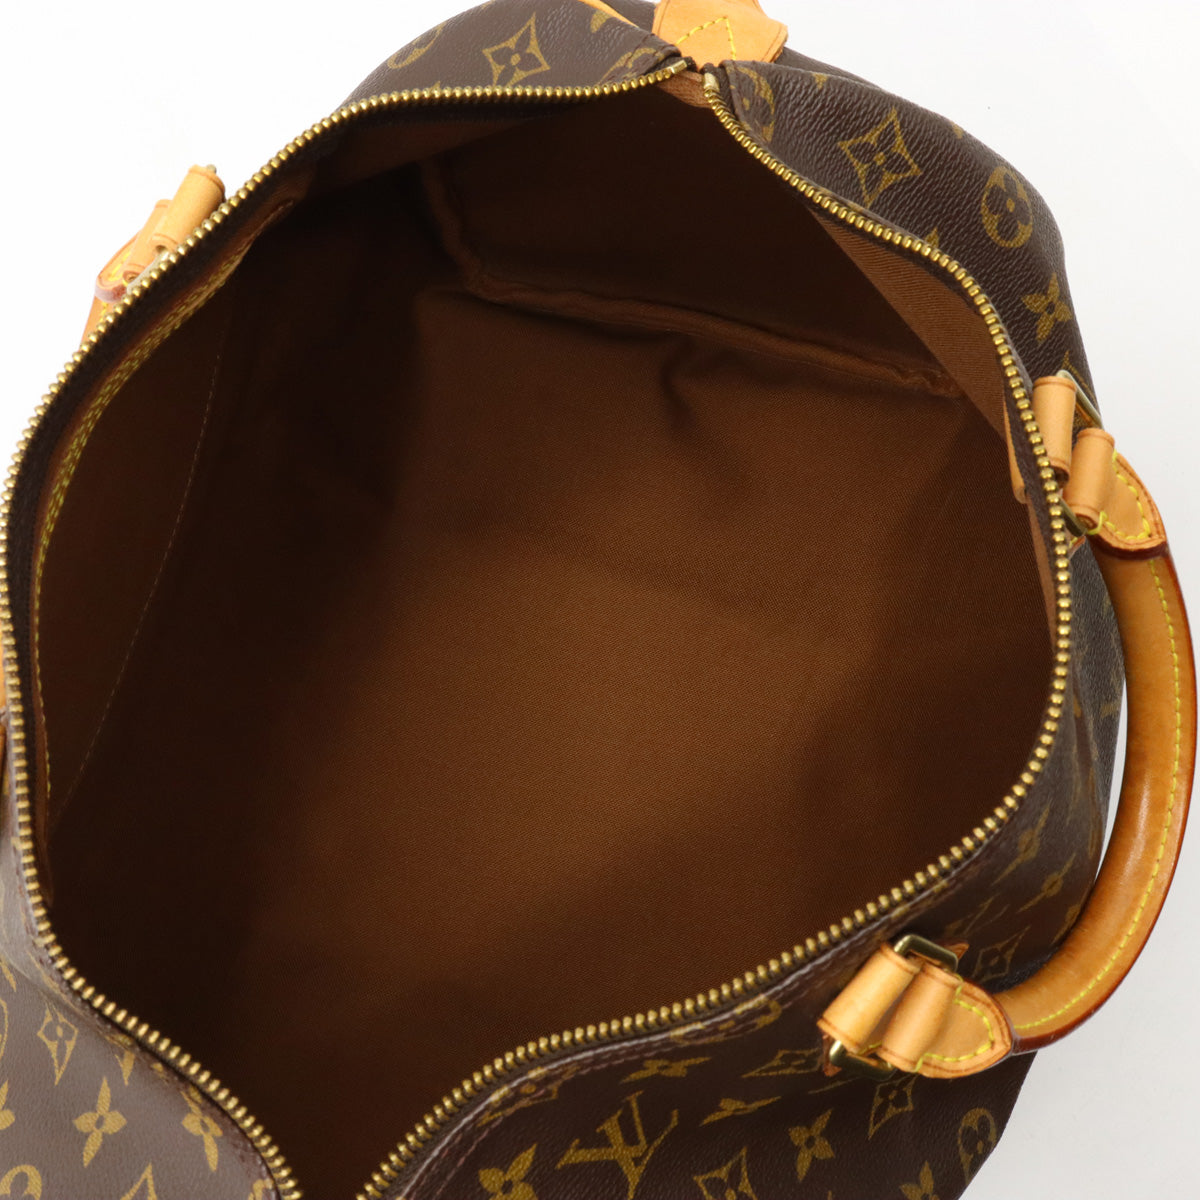 Louis Vuitton Pre-Loved Speedy 30 bag for Women - Multicolored in UAE